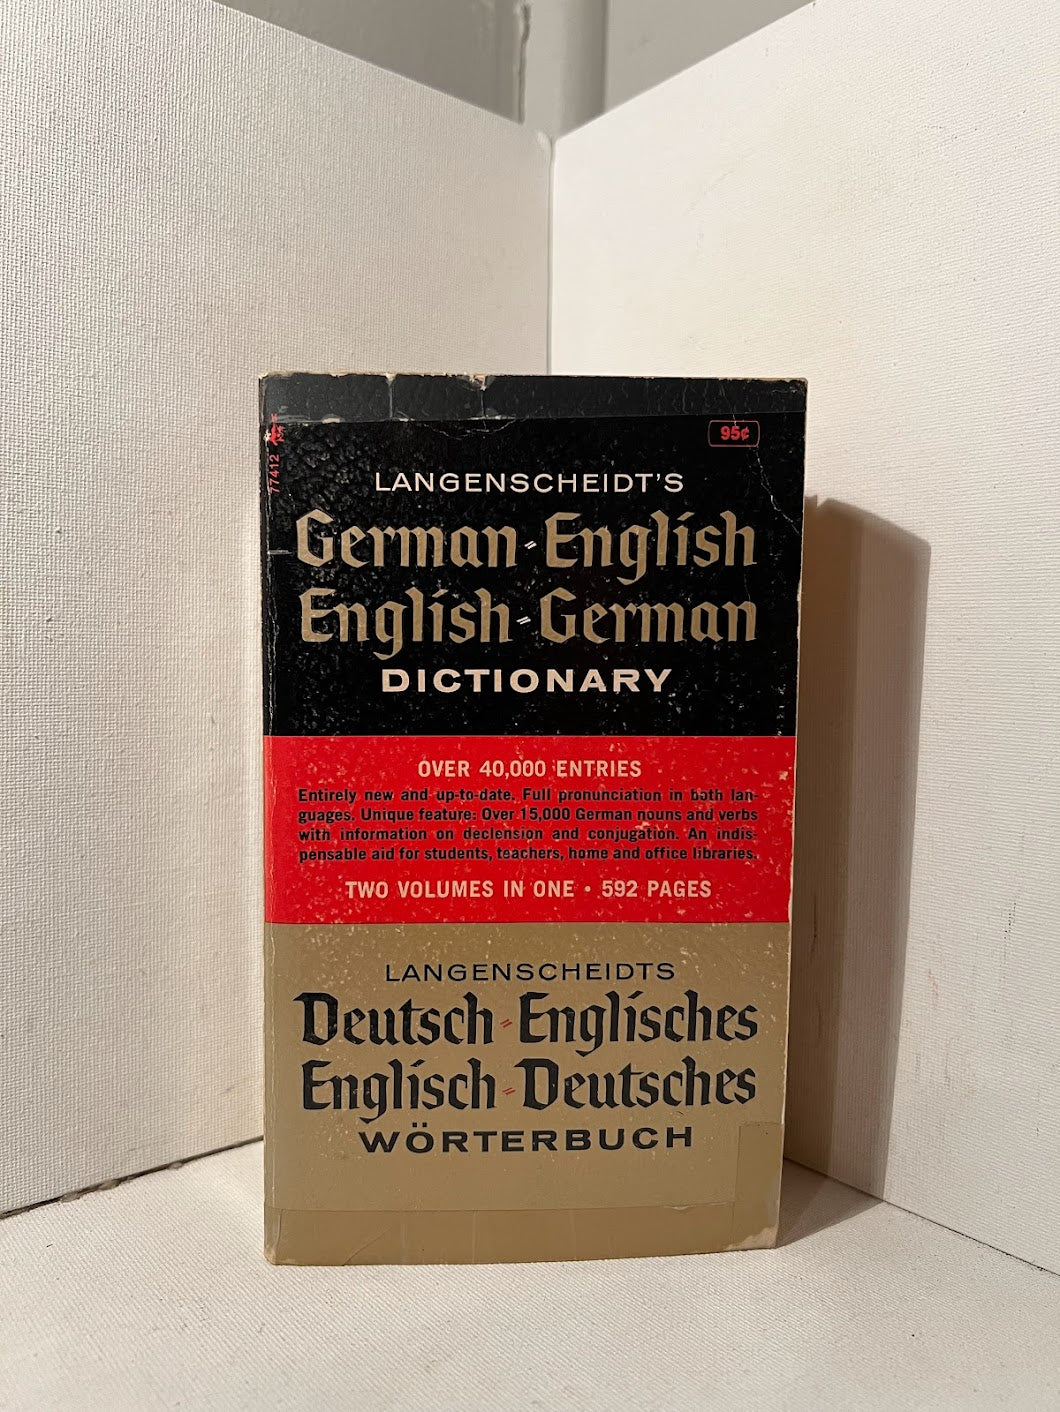 3 pocket dictionaries (Italian, French, German)